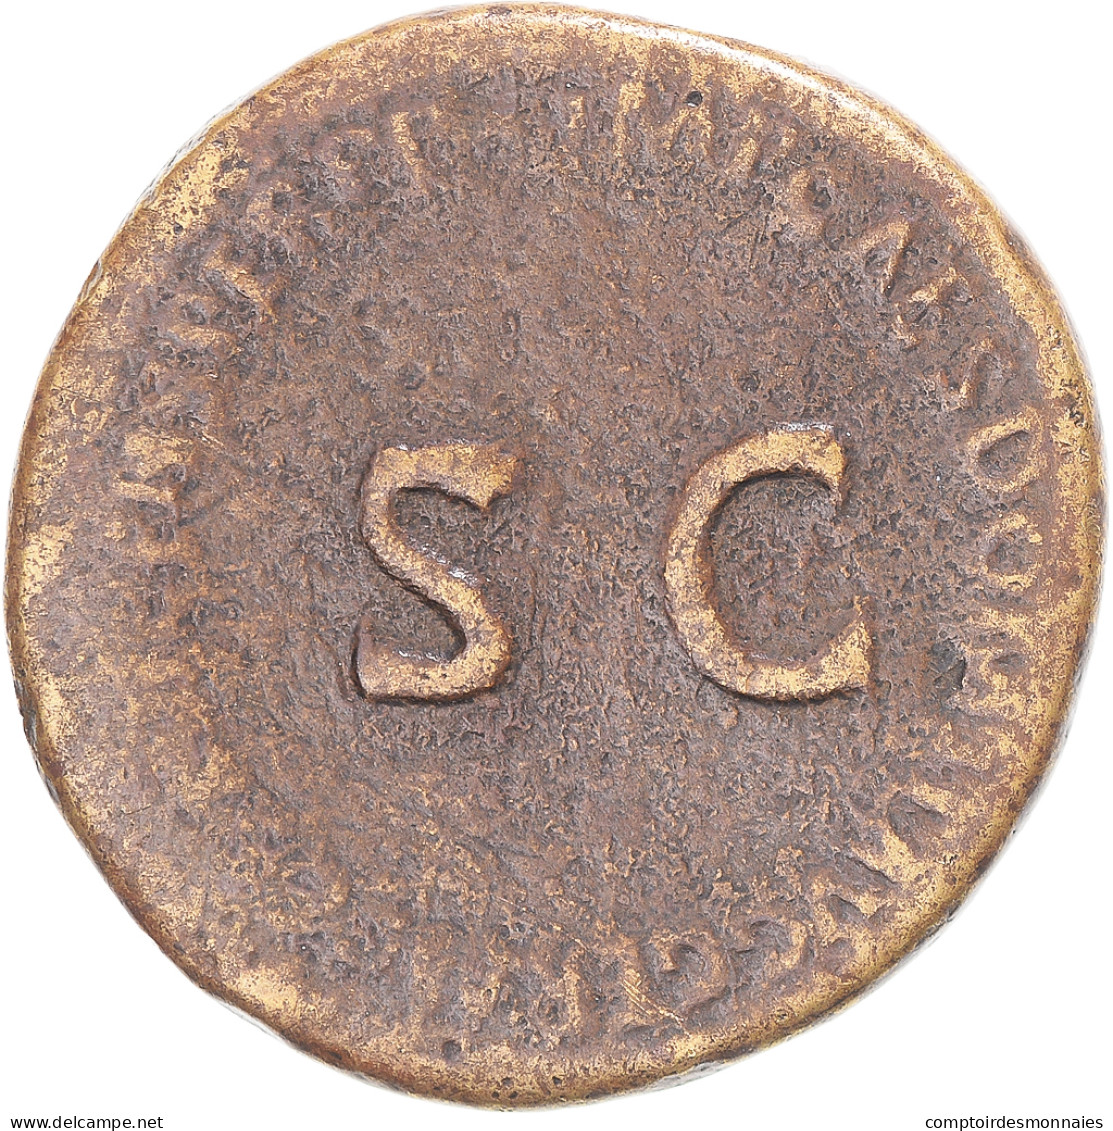 Monnaie, Domitien, Sesterce, 92-94, Rome, B+, Bronze, RIC:760 - La Dinastia Flavia (69 / 96)